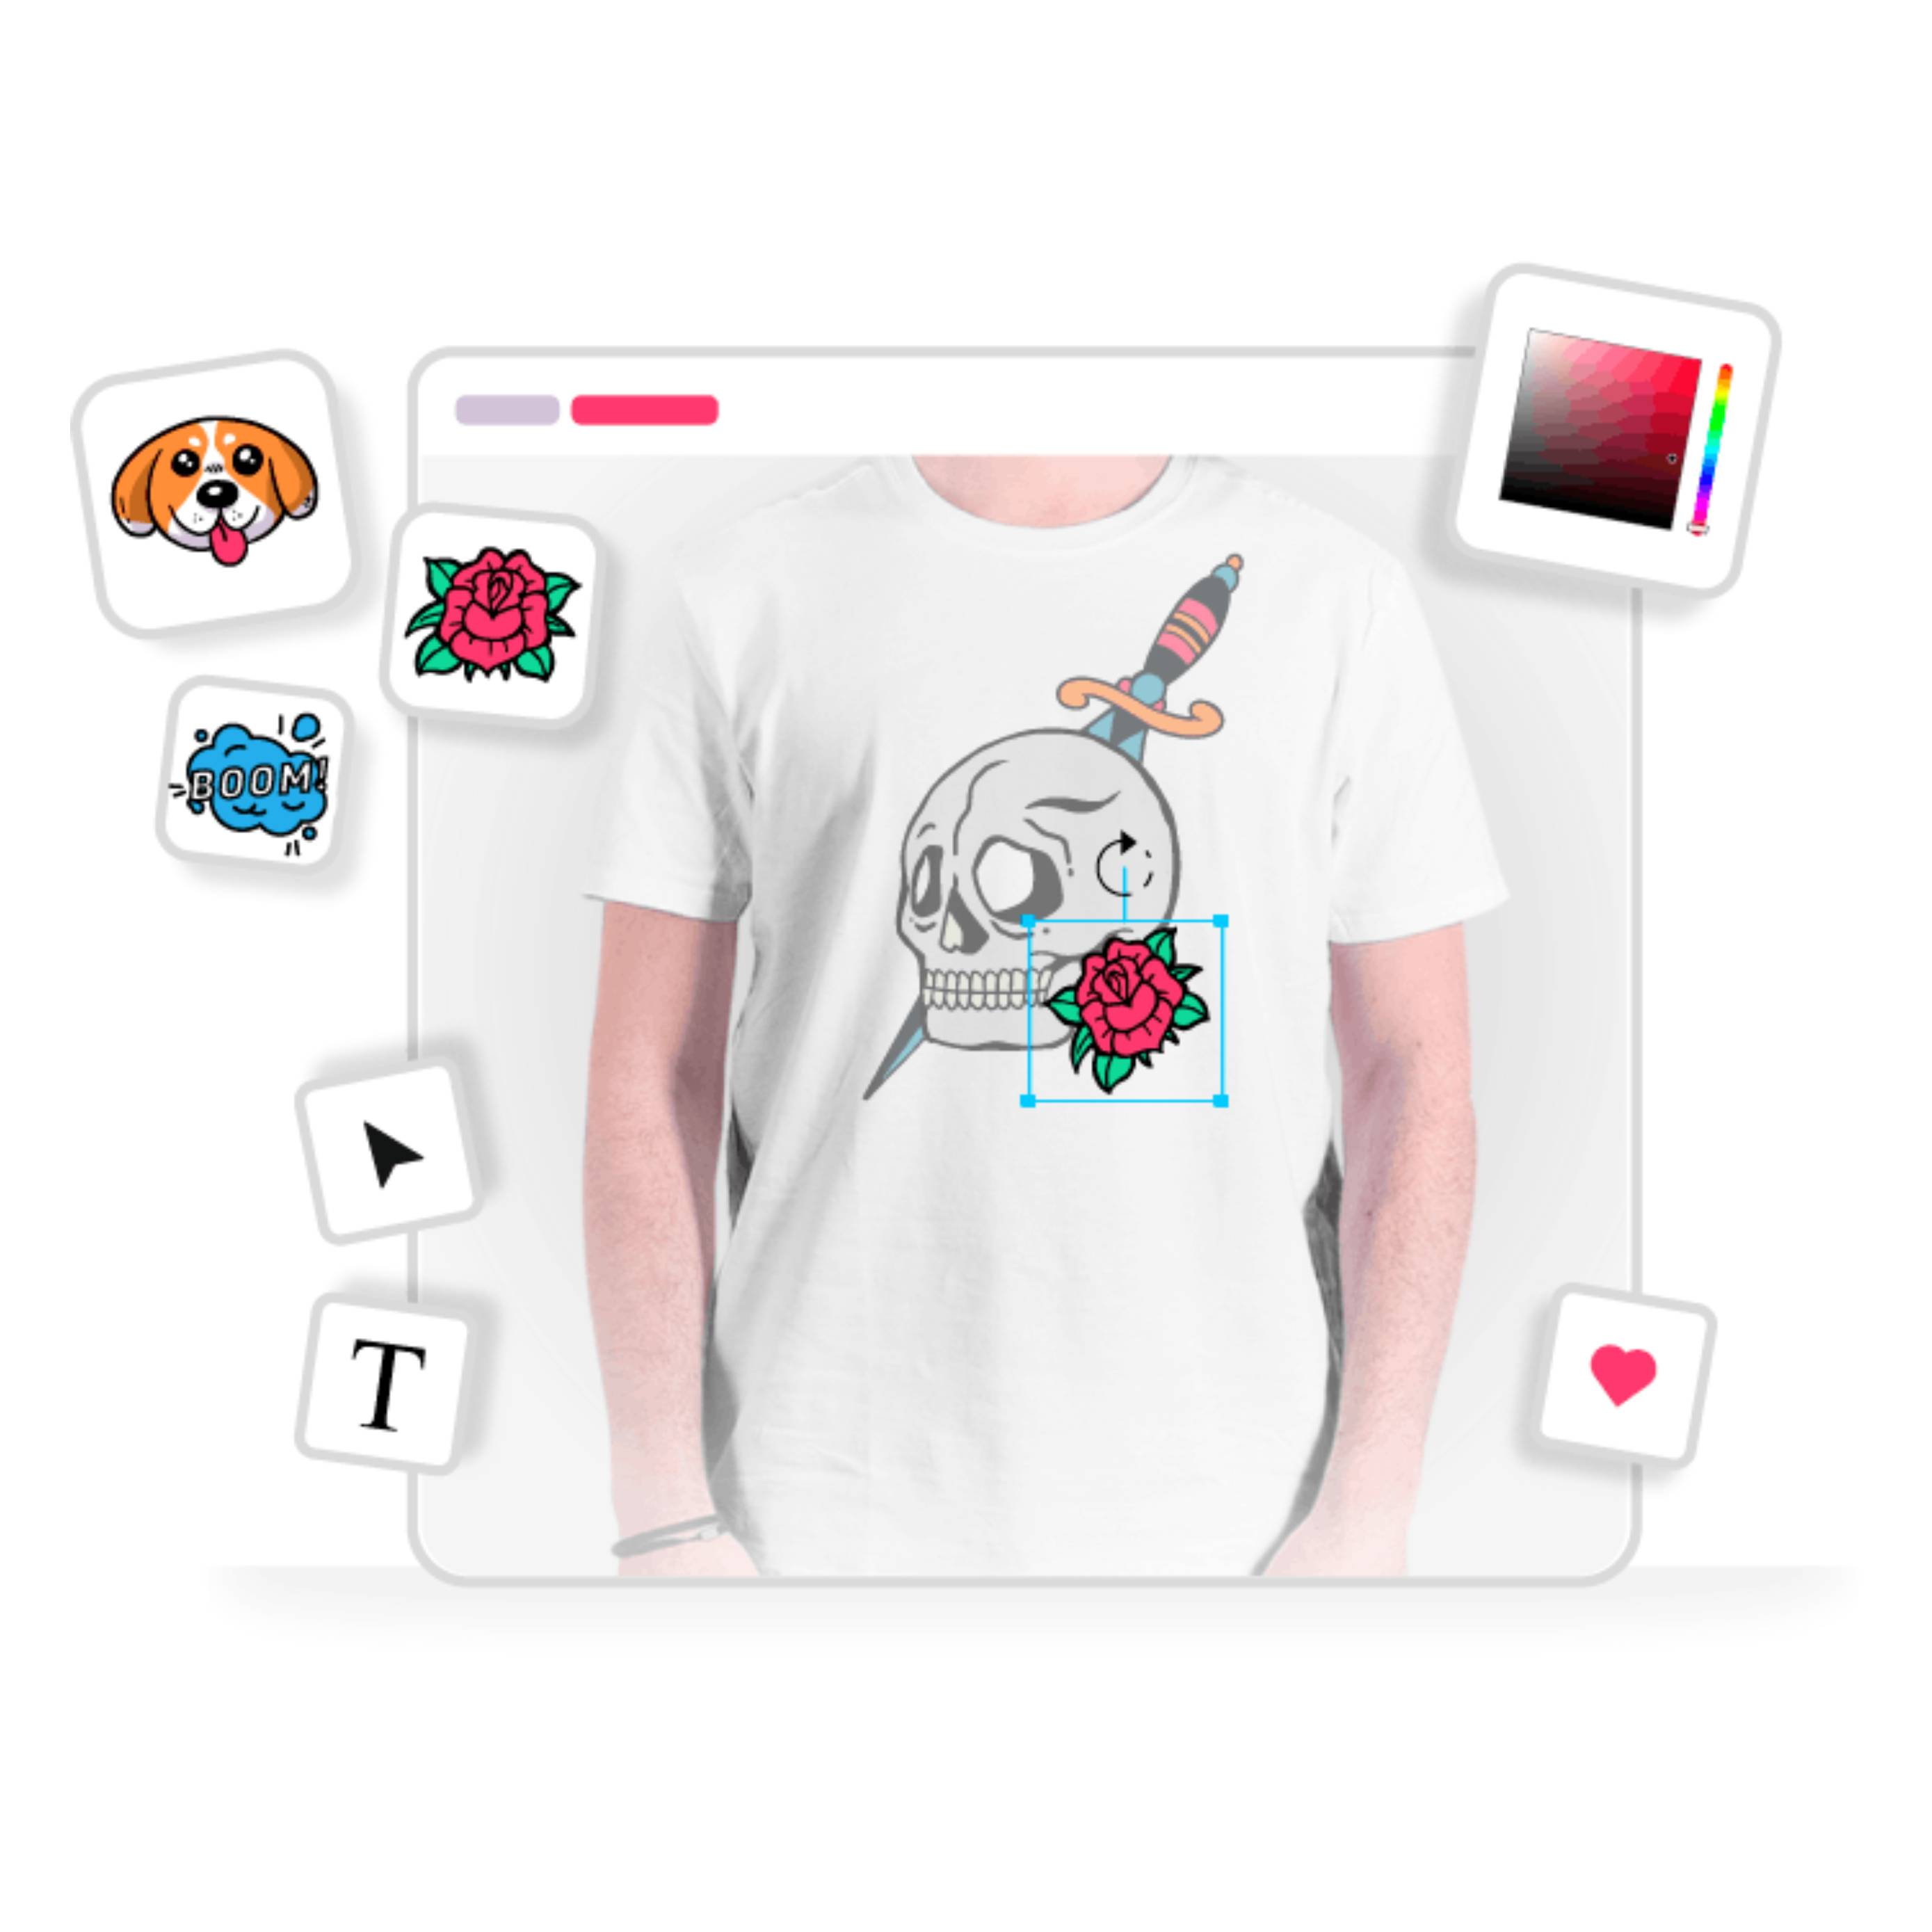 Illustration of the Online T-shirt Maker